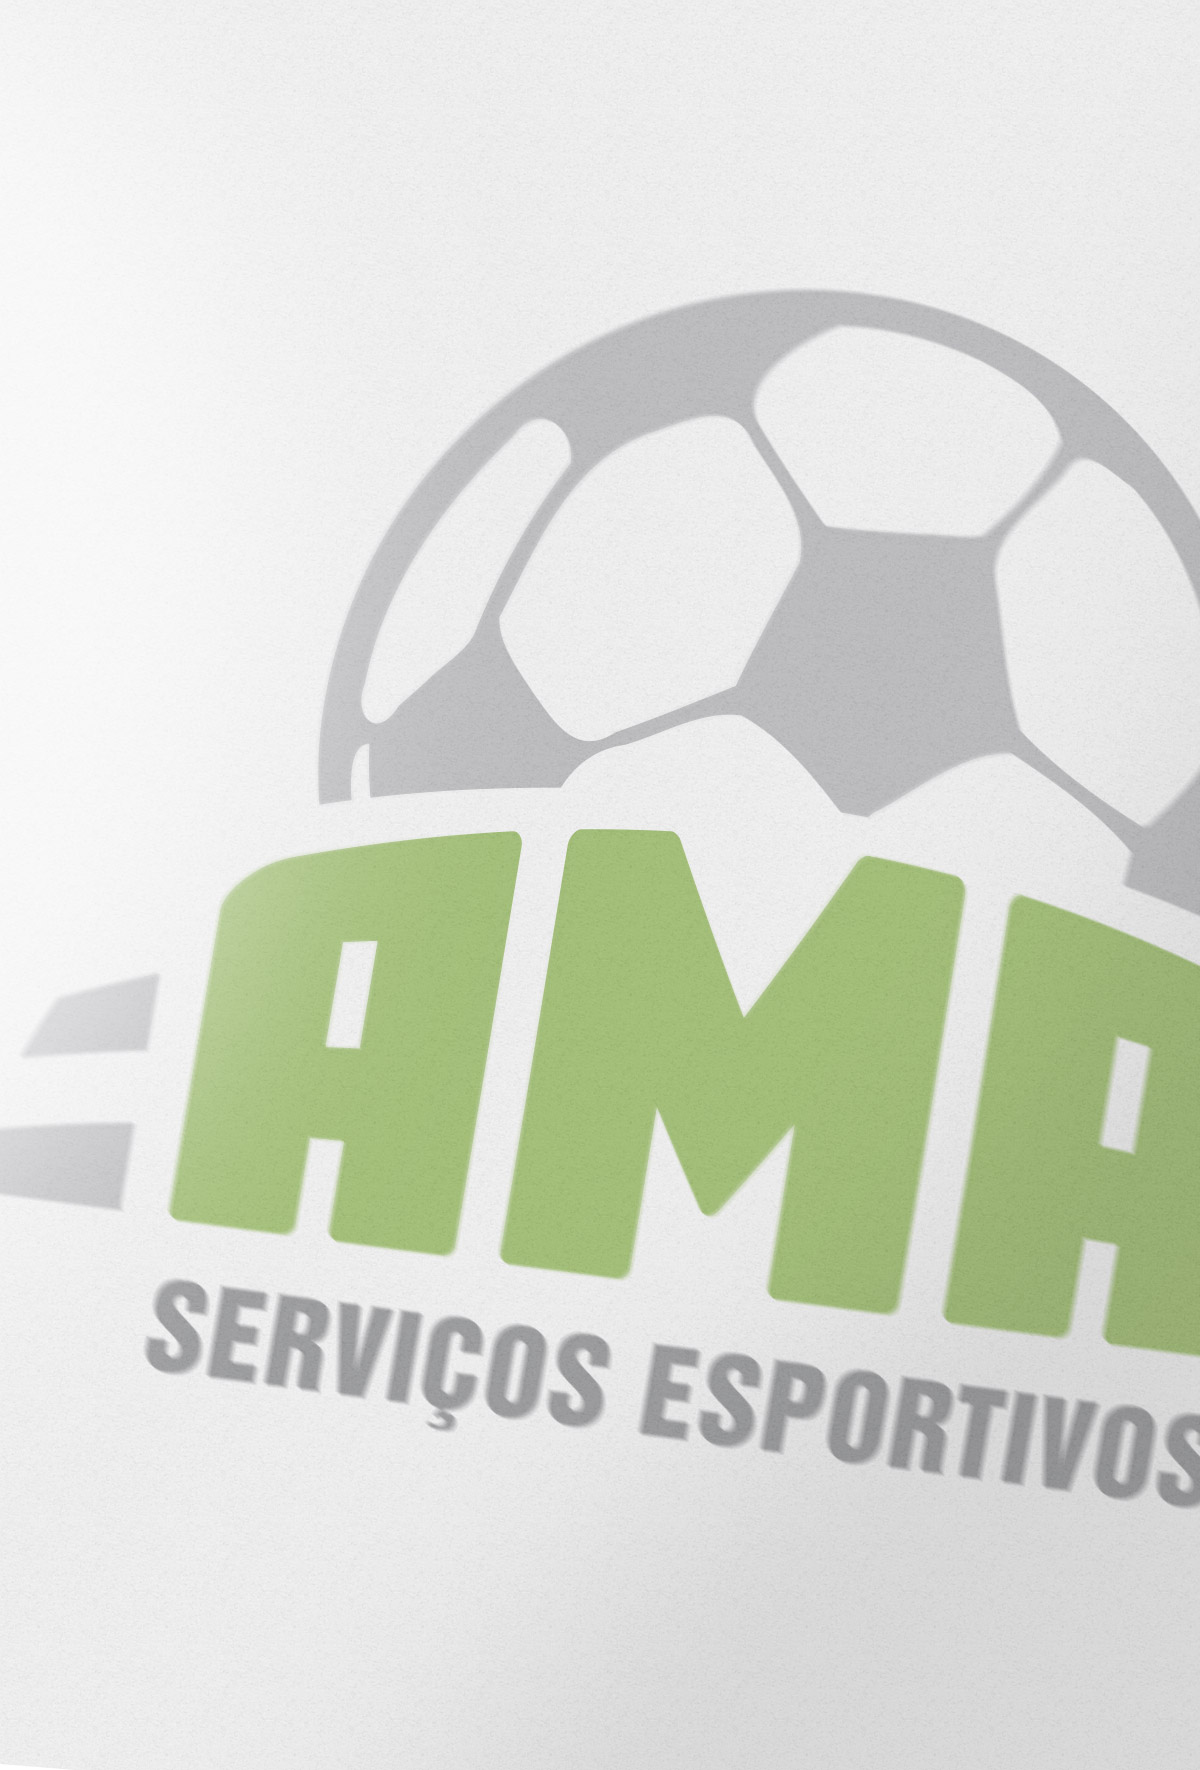 AMA - Logotipo